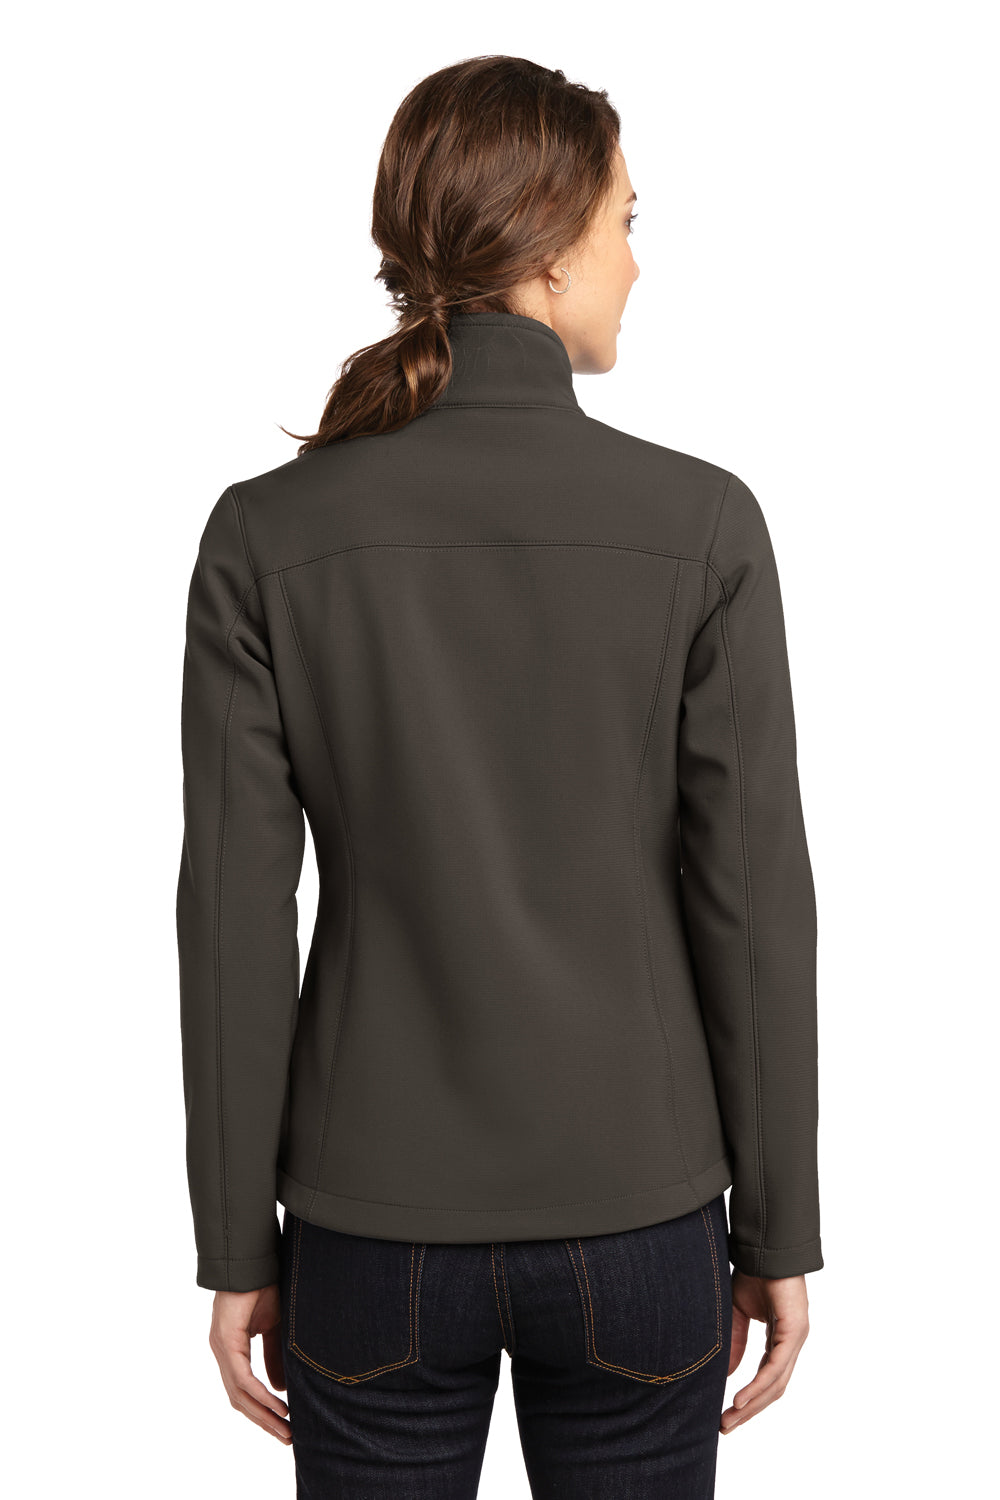 Eddie Bauer EB535 Womens Rugged Water Resistant Full Zip Jacket Canteen Grey Back